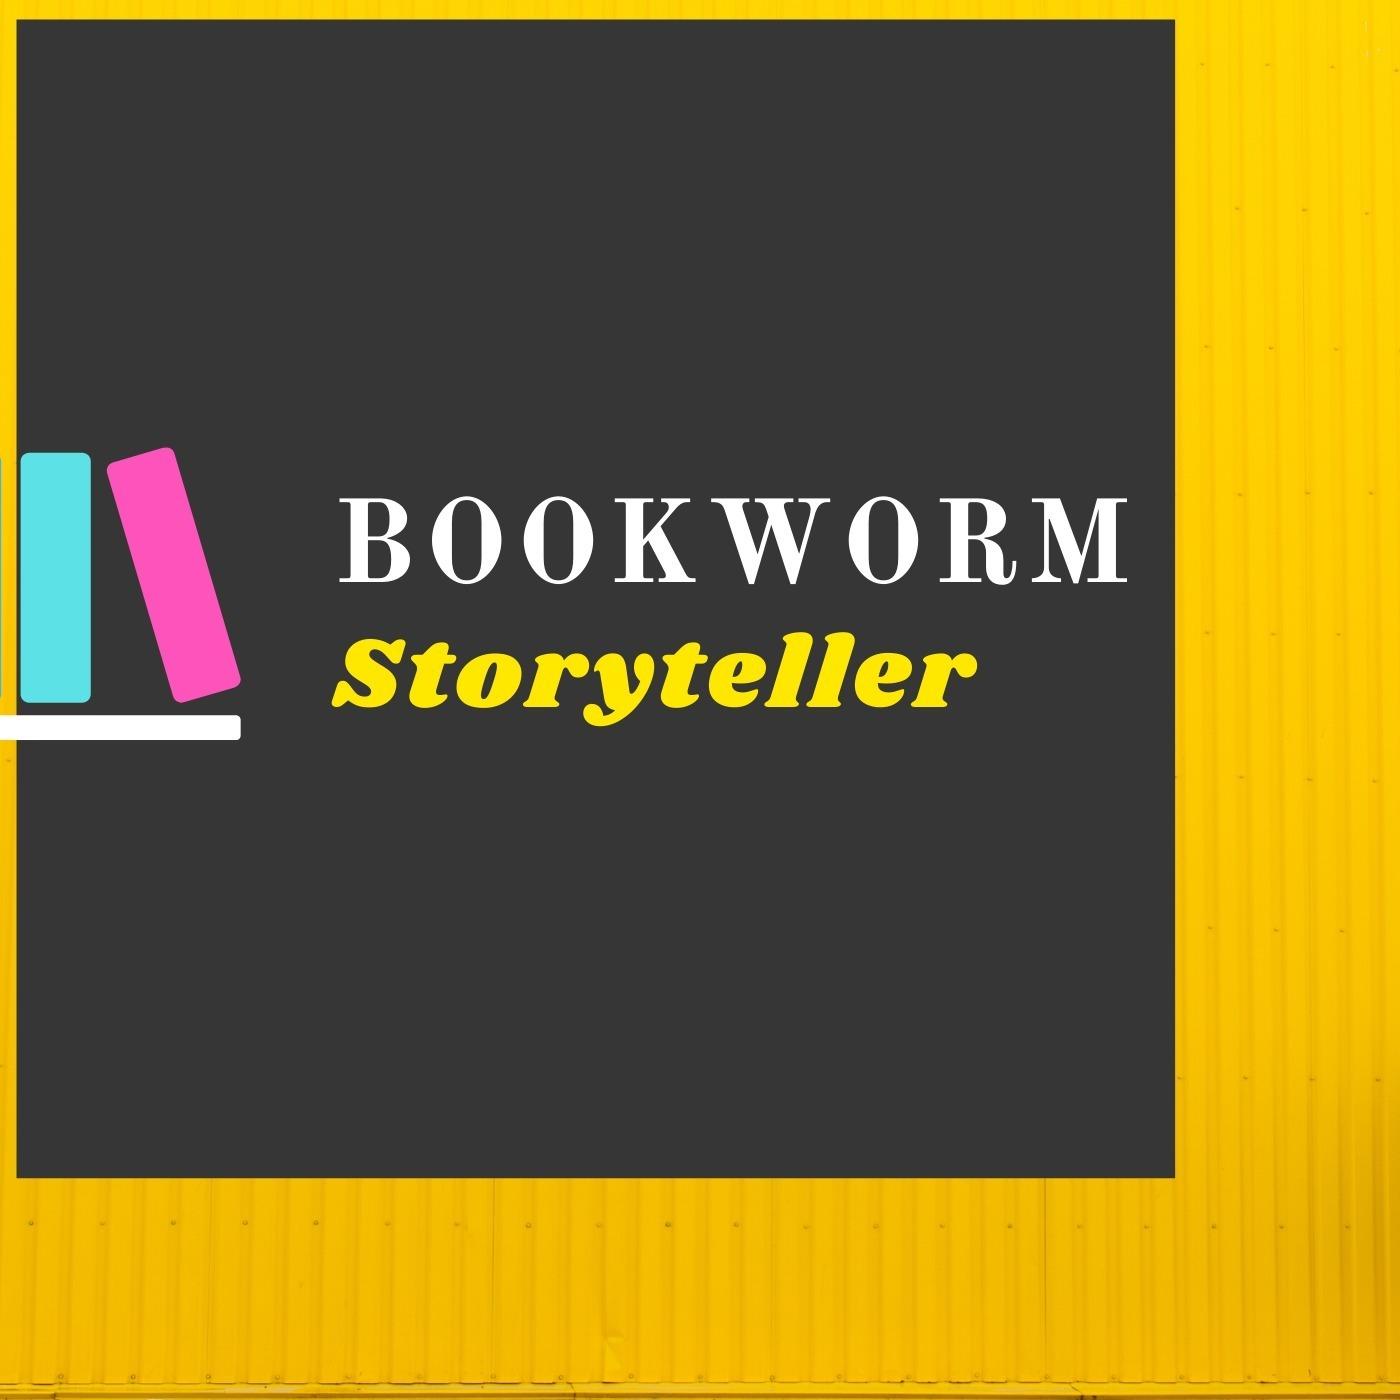 Bookworm Storyteller